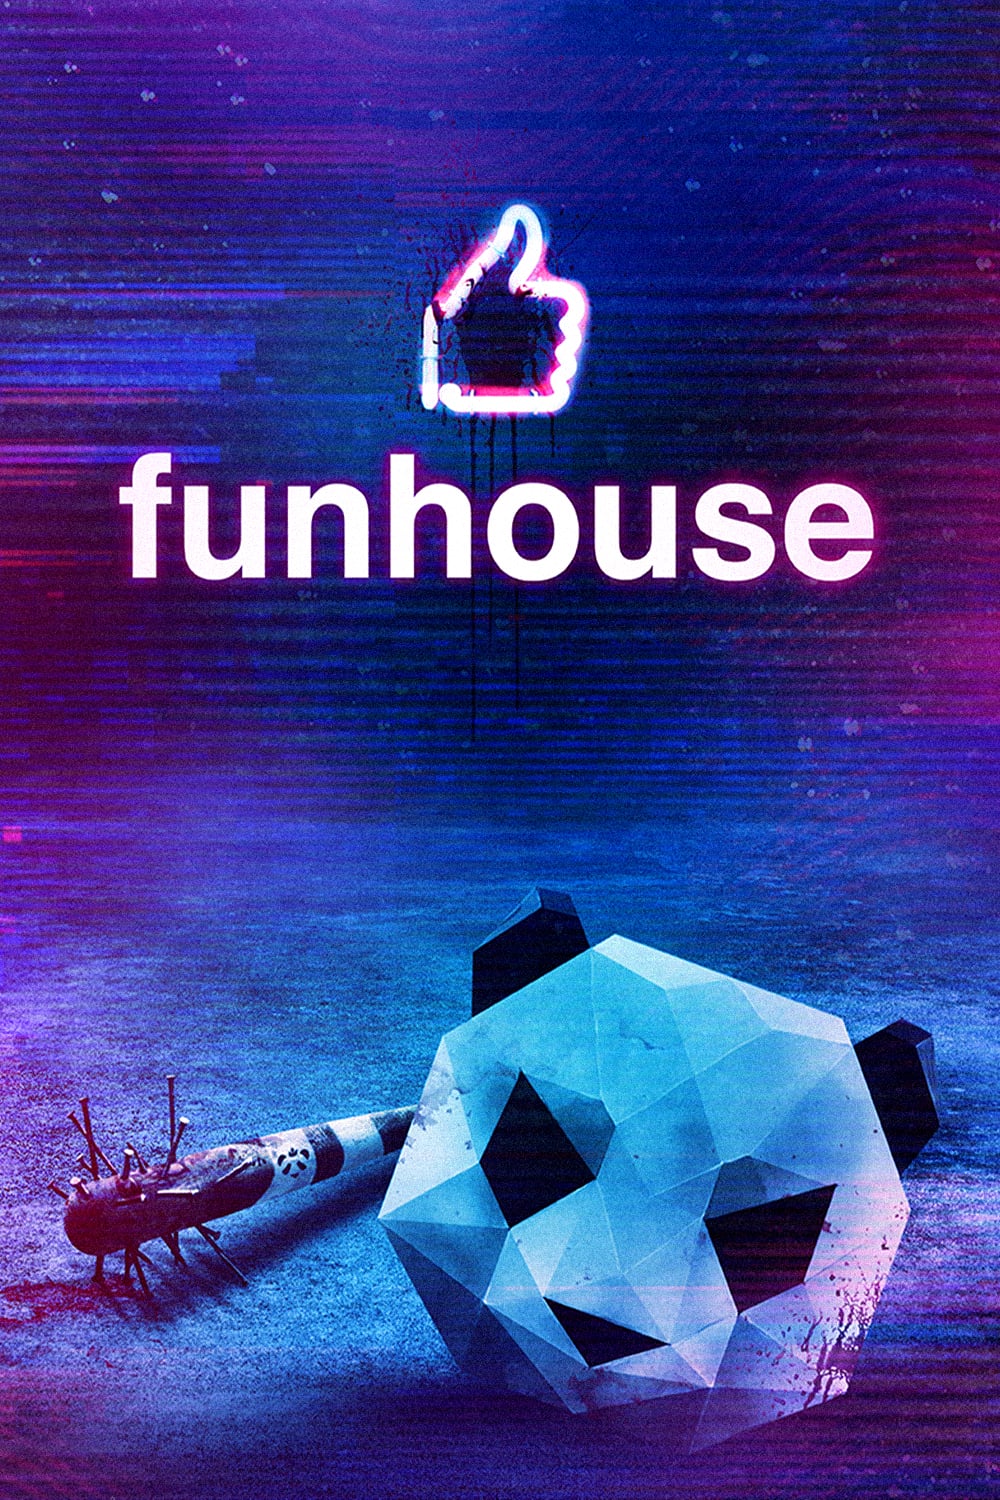 Funhouse [HD] (2019)